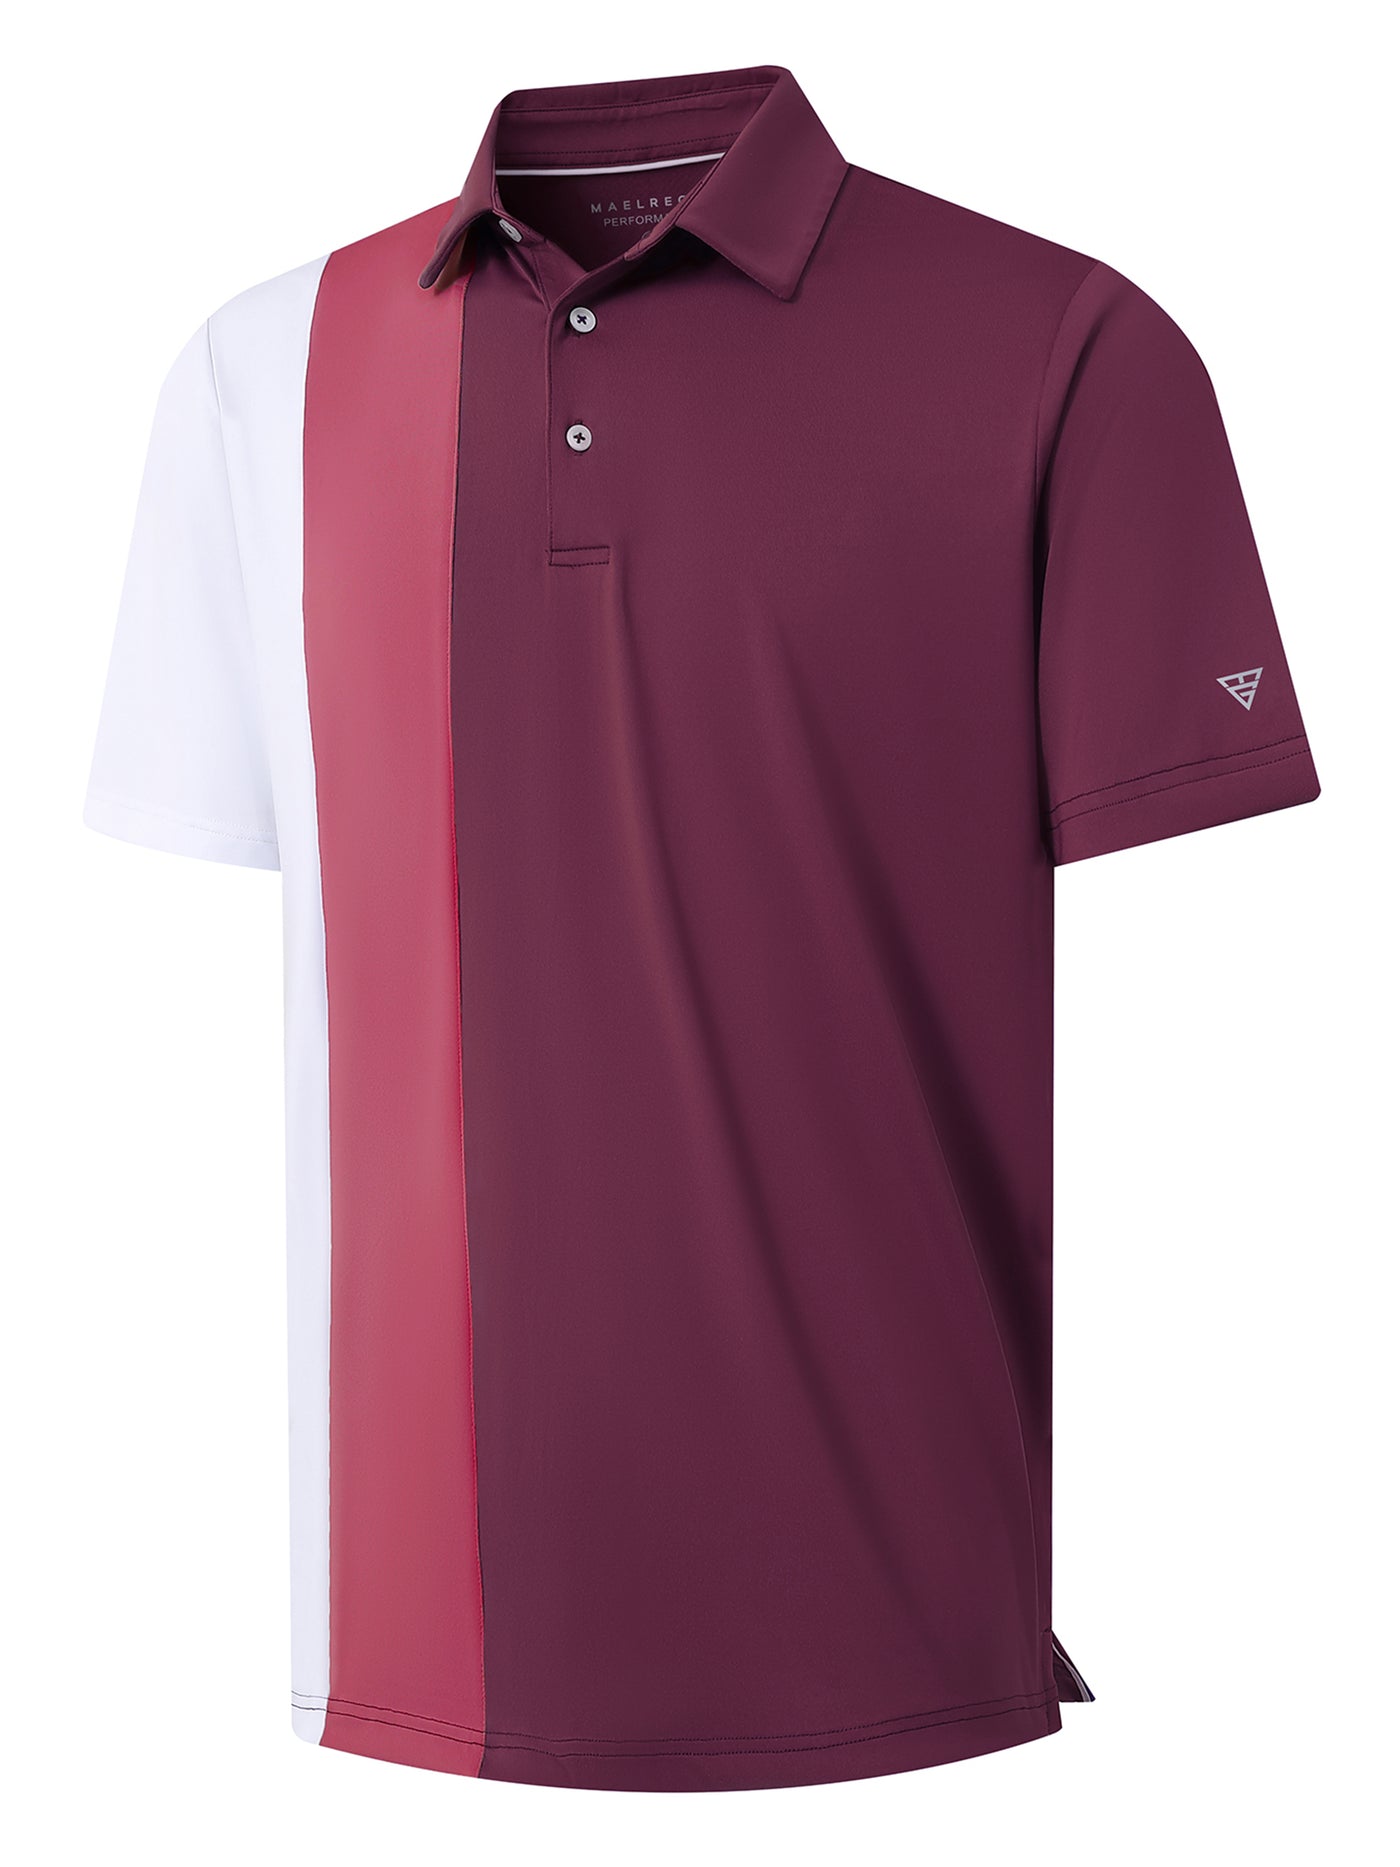 Men's Solid Color Block Patchwork Polo Shirts-Cranberry